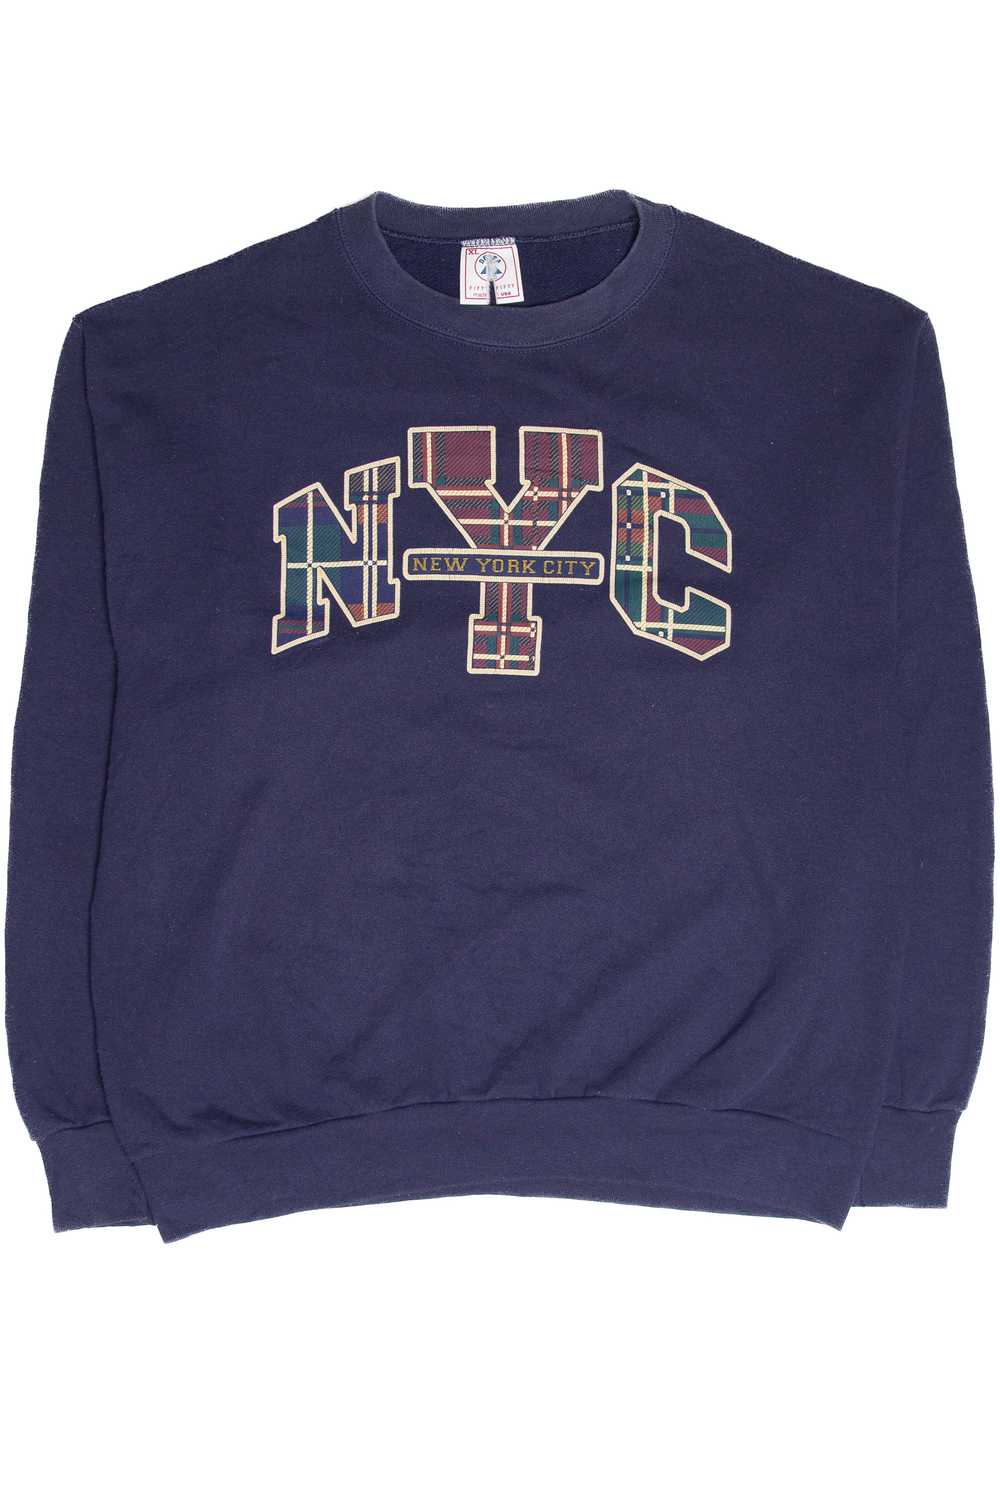 Vintage New York City Graphic Sweatshirt - image 1